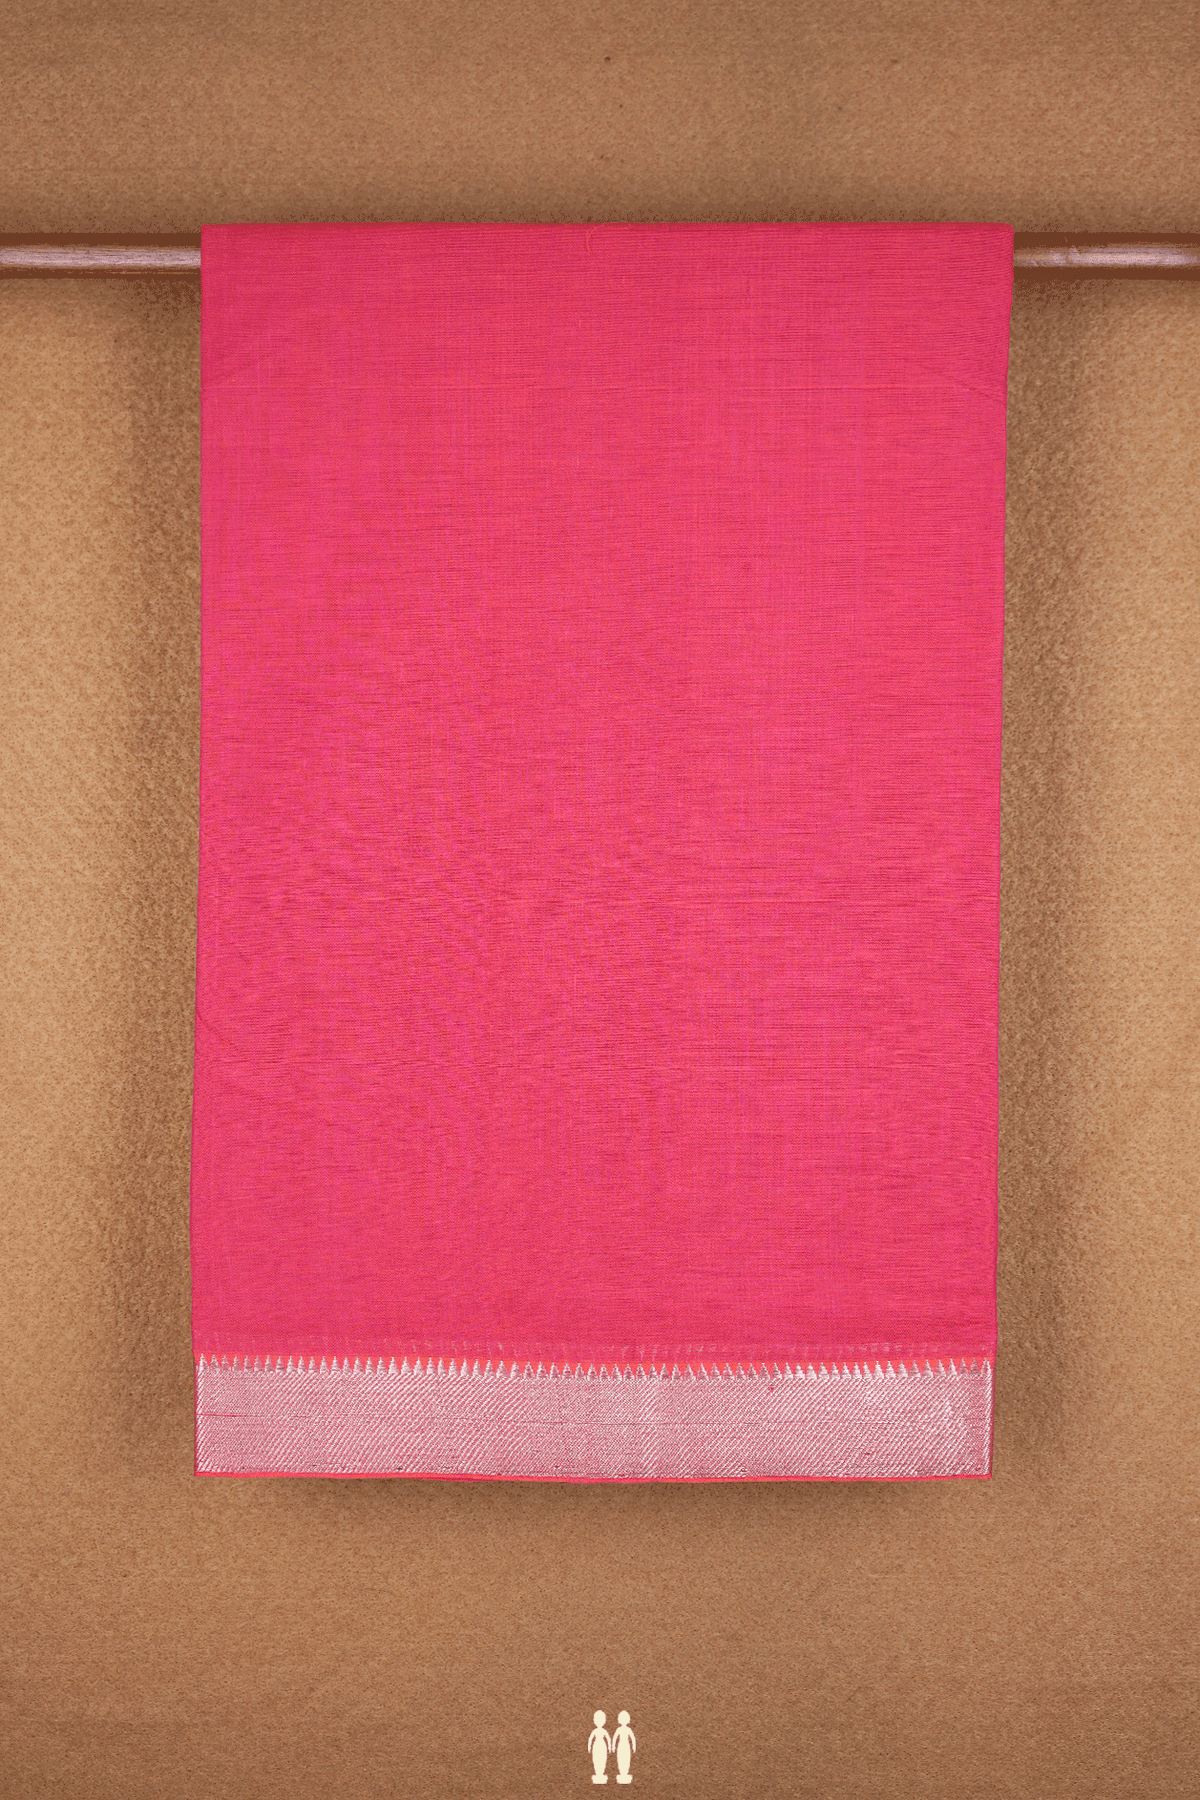 Twill Weave Border Plain Rose Red Mangalagiri Cotton Saree